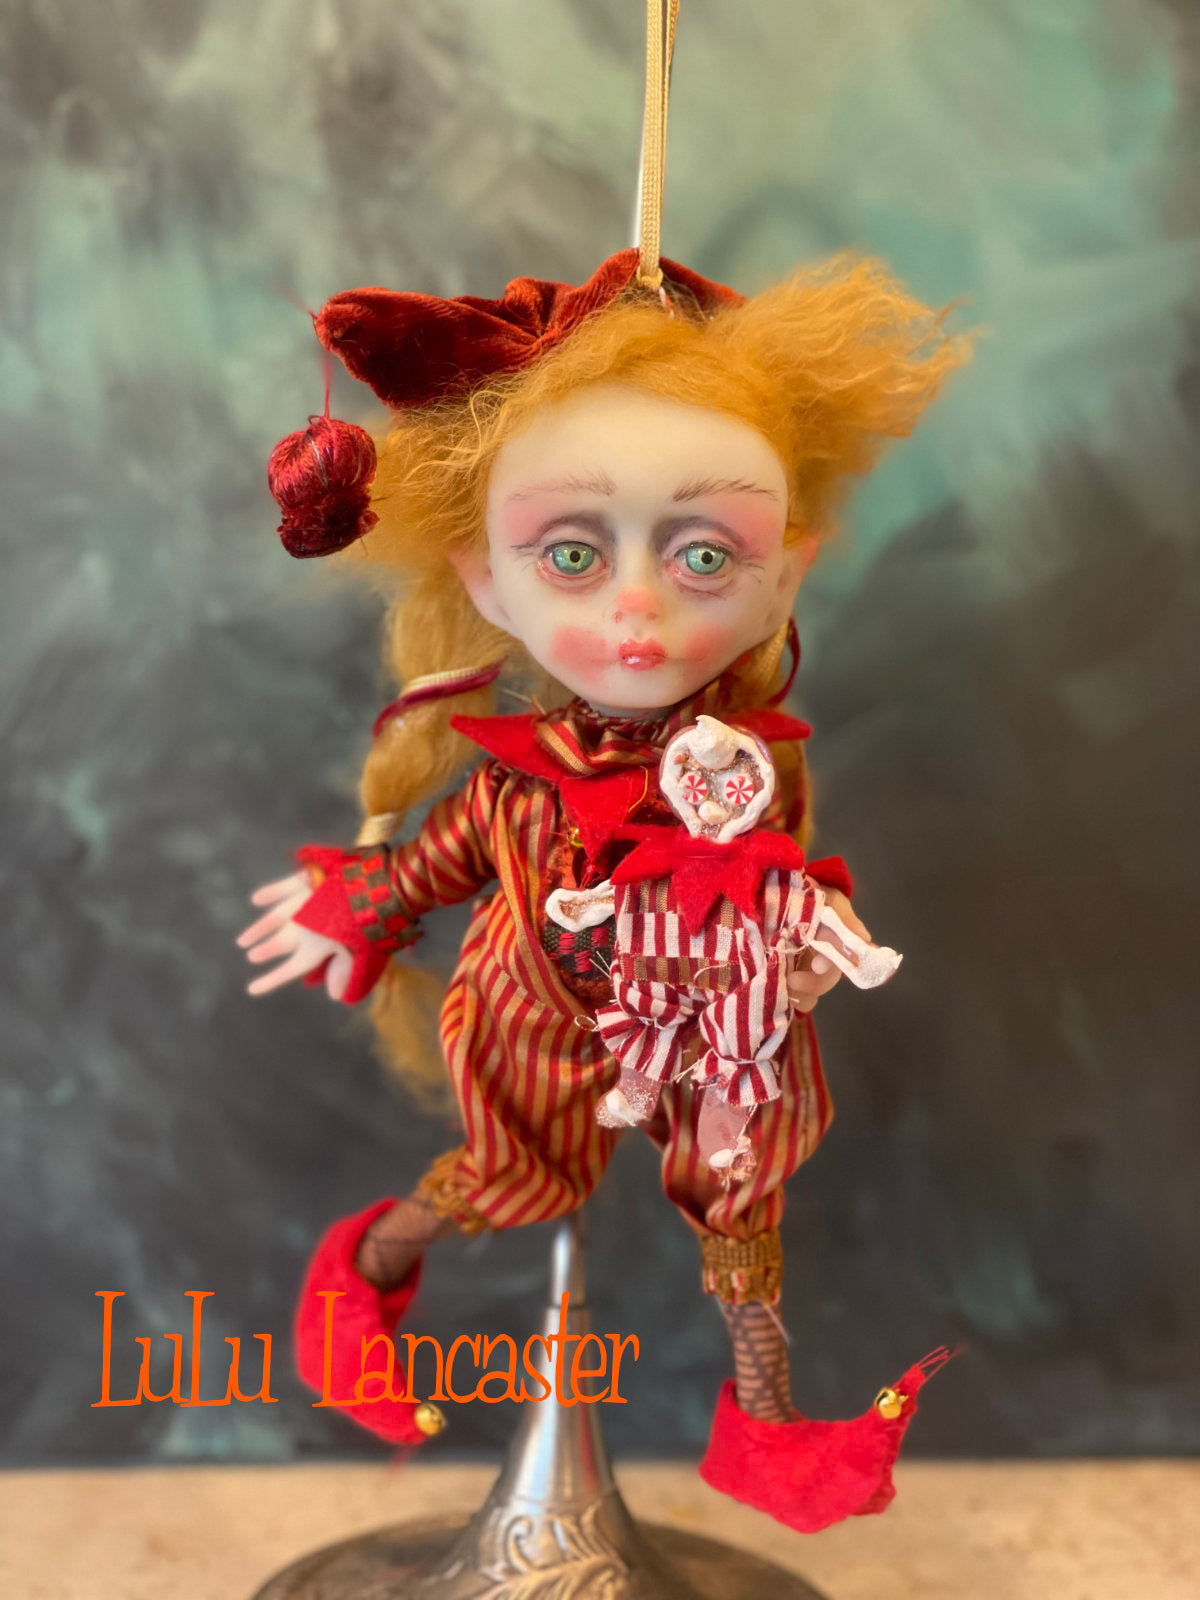 Nutmeg Cookie the Christmas Elf Original LuLu Lancaster Art Doll